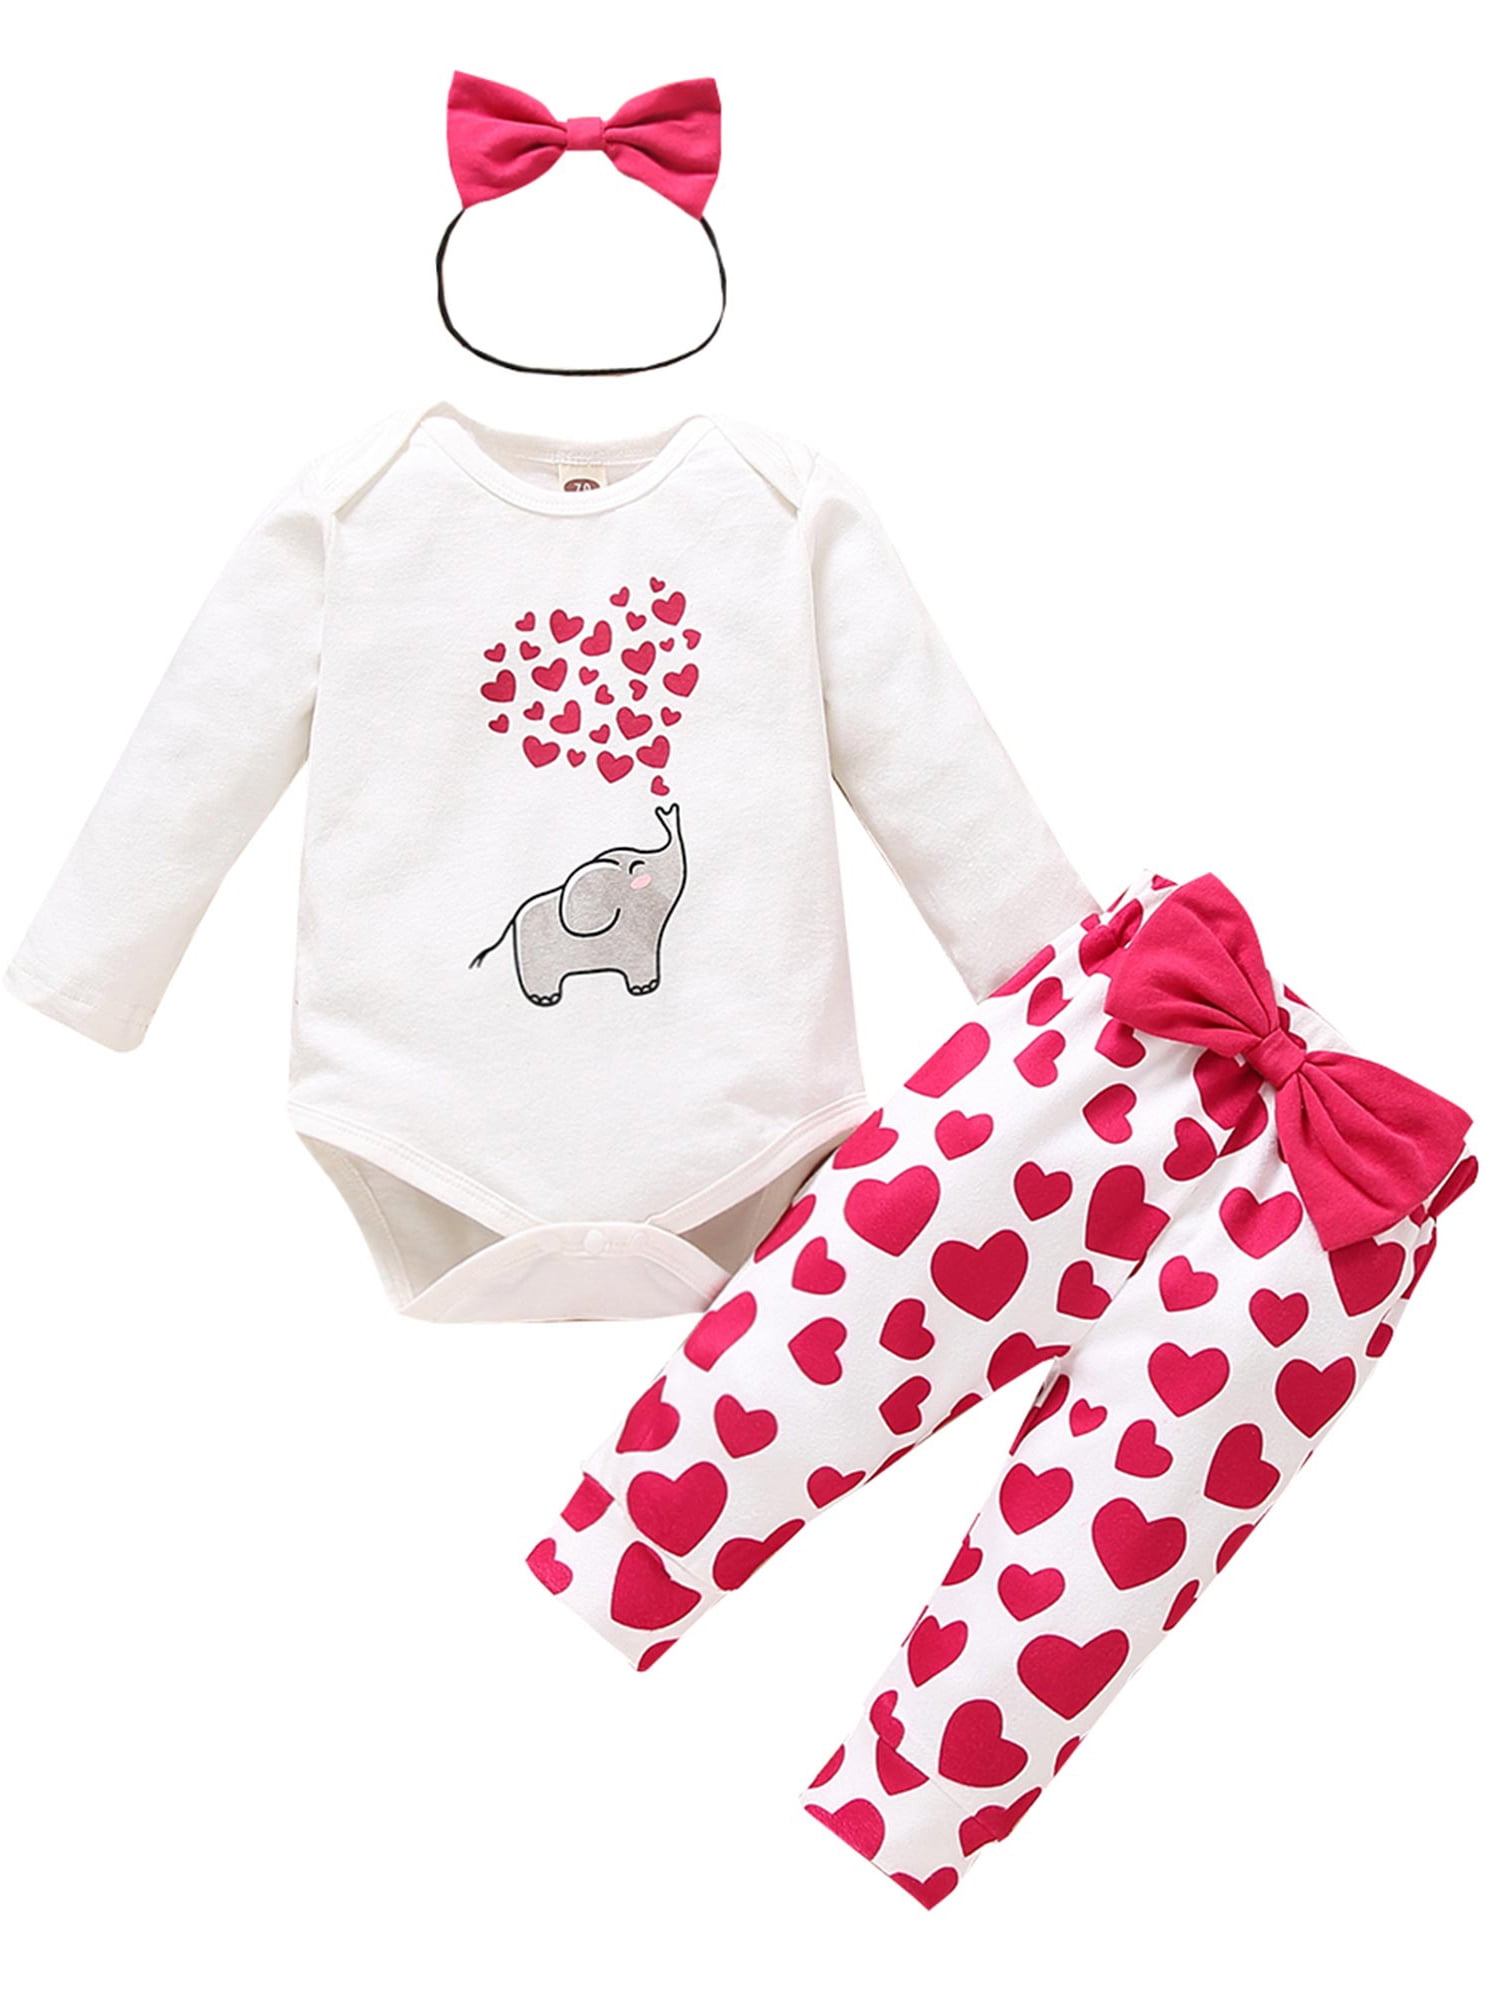 Lapa Toddler Baby Girl Love Heart Outfit Long Sleeve Top Skirt Dress  3pcs Set 